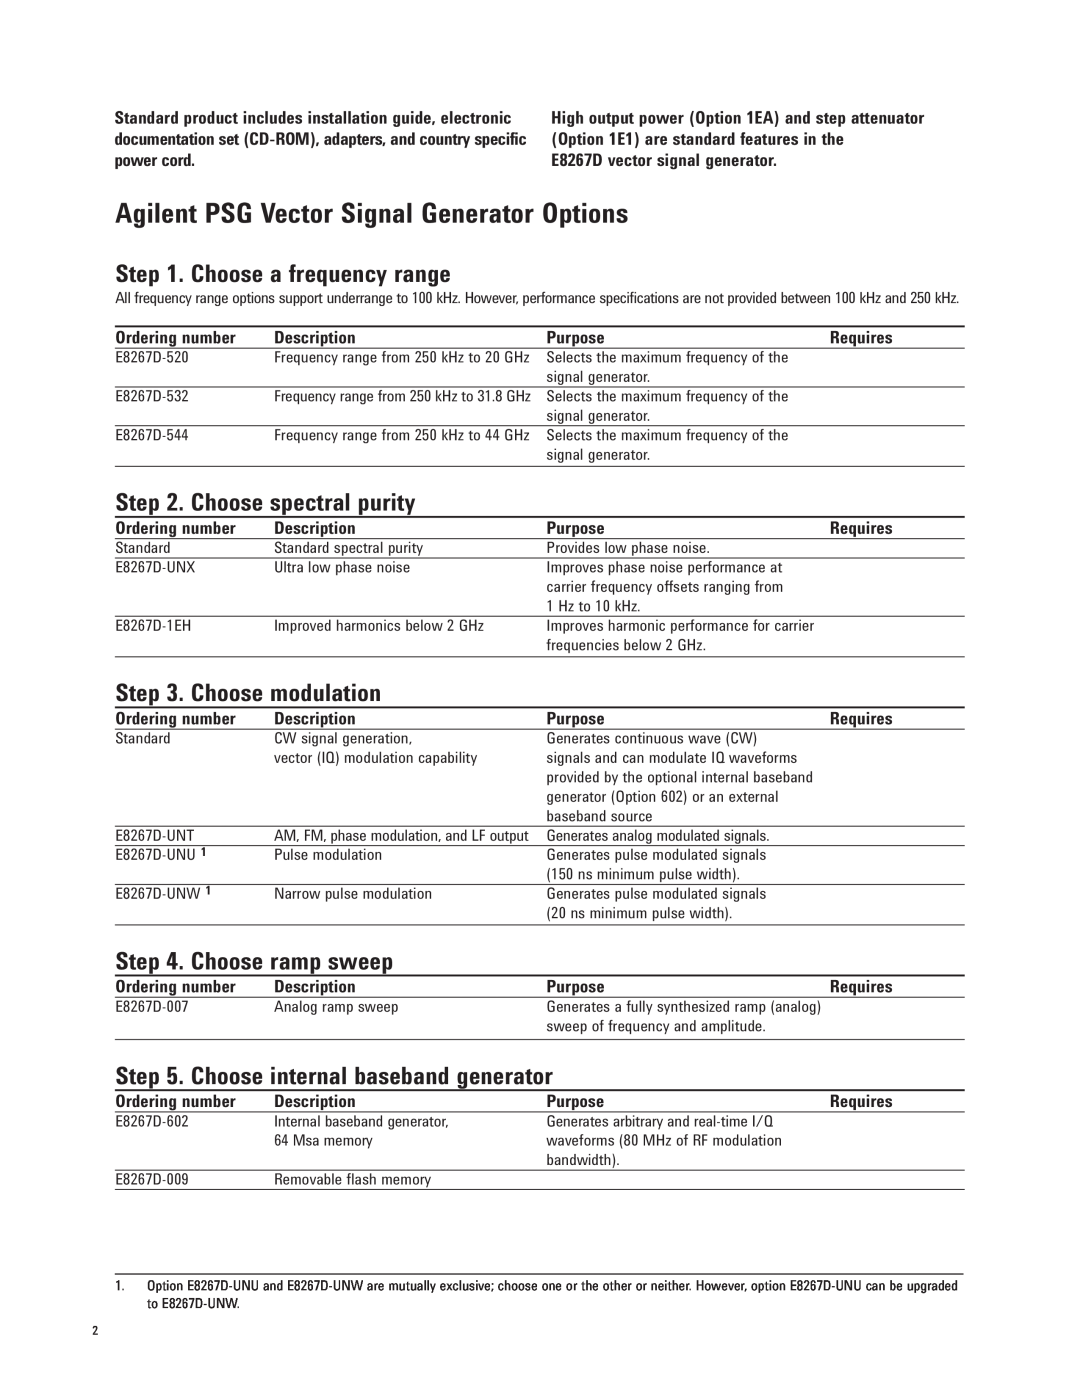 Agilent Technologies E8267D Agilent PSG Vector Signal Generator Options, Choose a frequency range, Choose spectral purity 